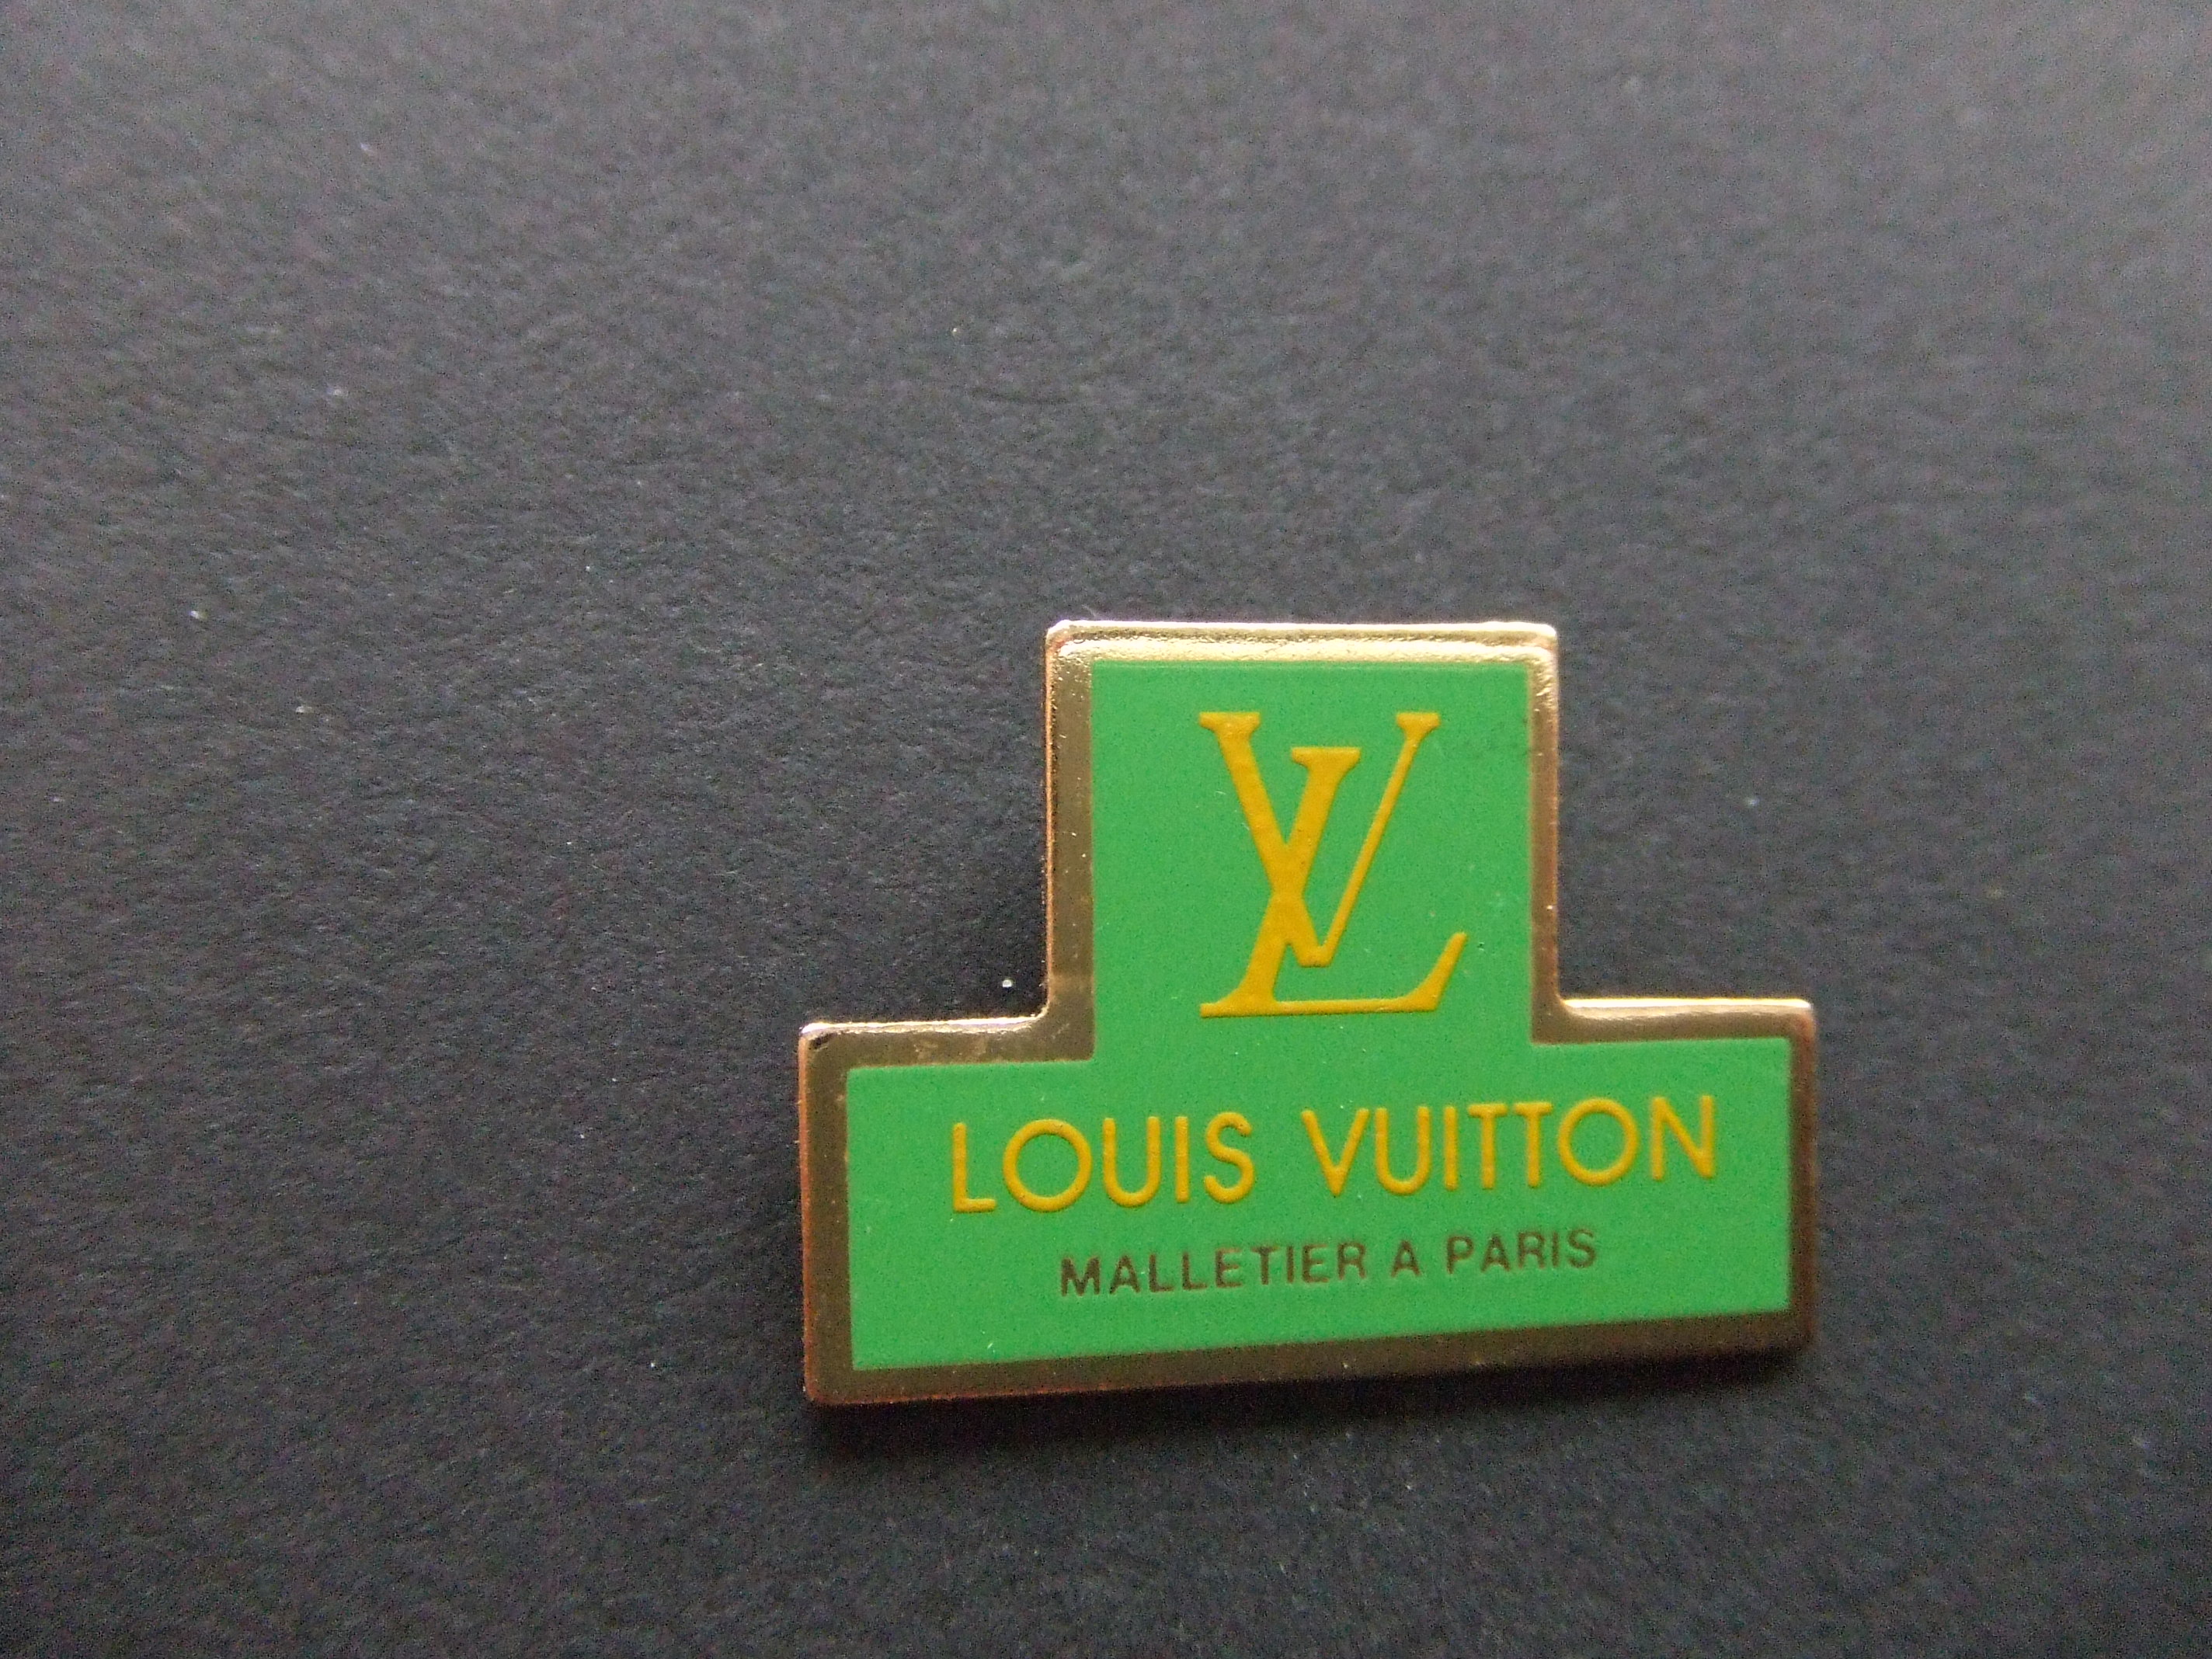 Louis Vuitton Malletier koffers, tassen, accessoires